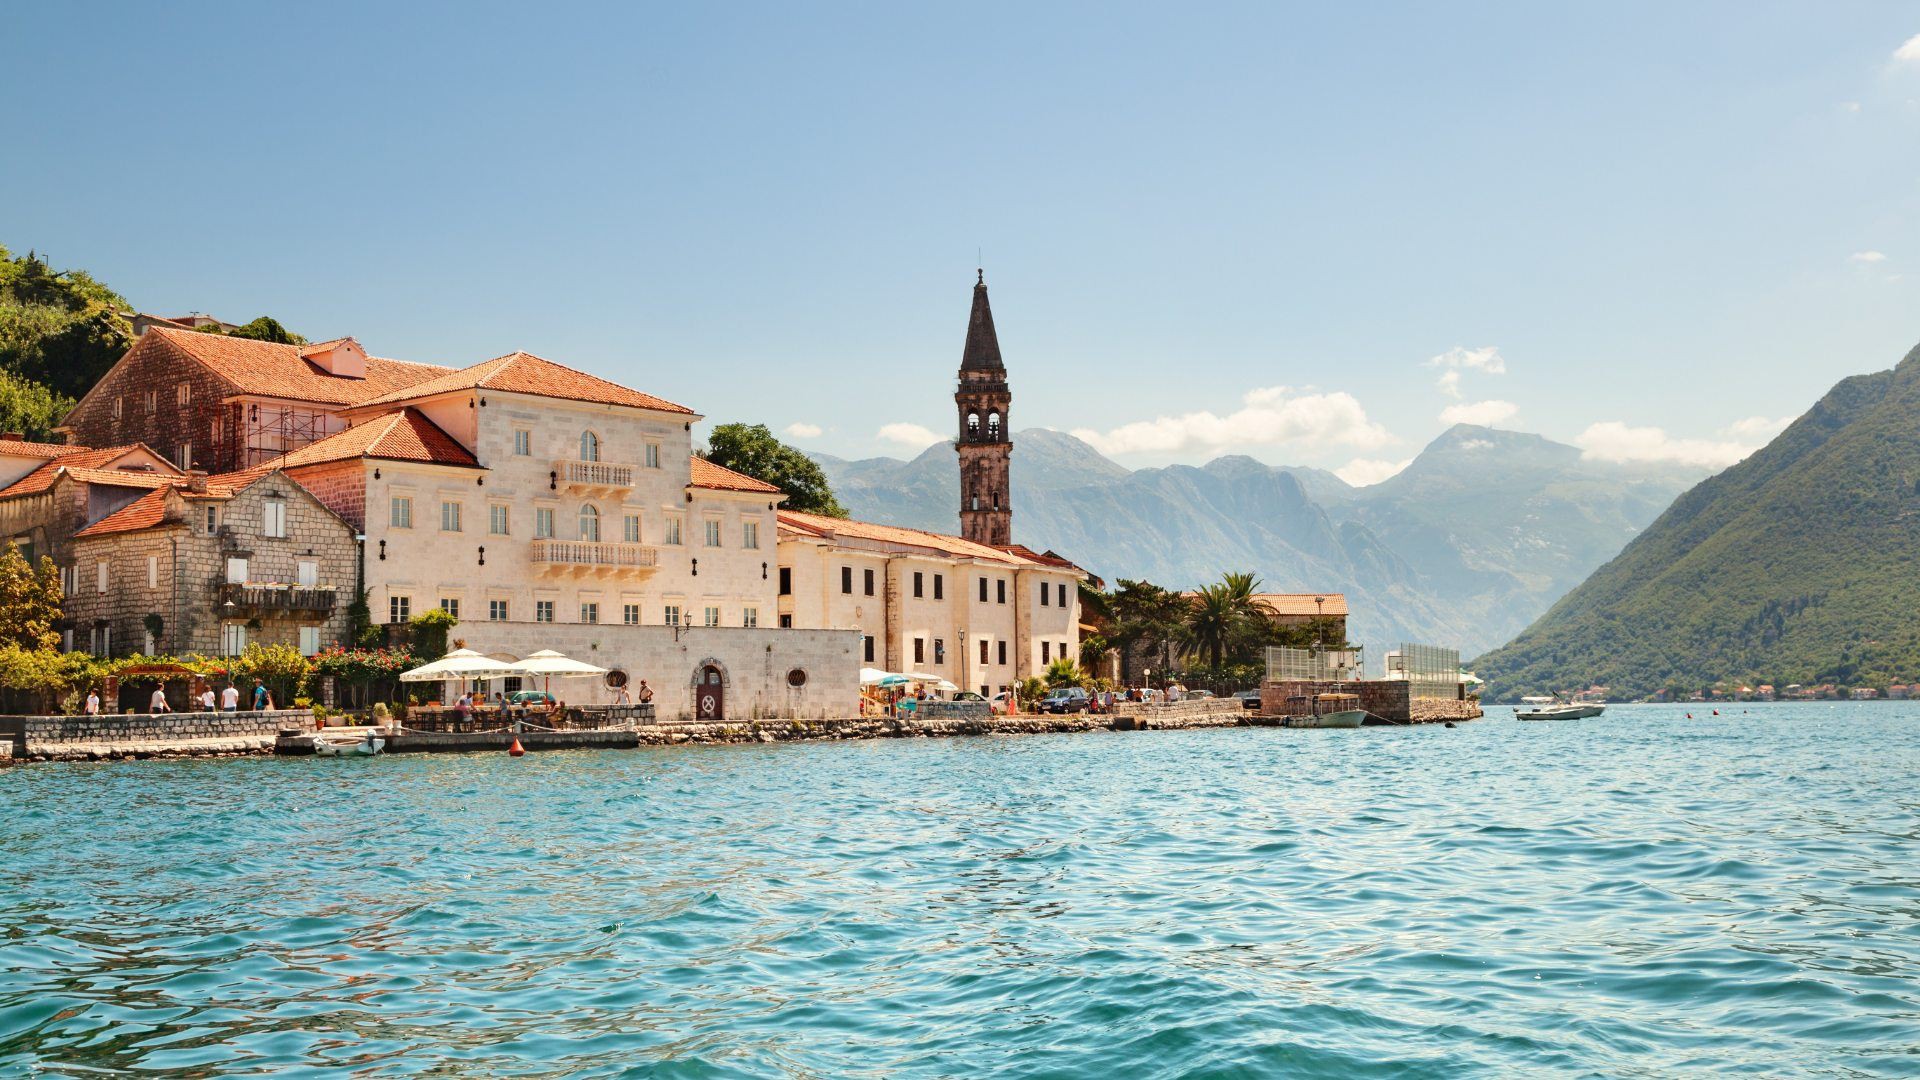 Perast - Adriatic Sea | Croatia Cruise Croatia Cruise